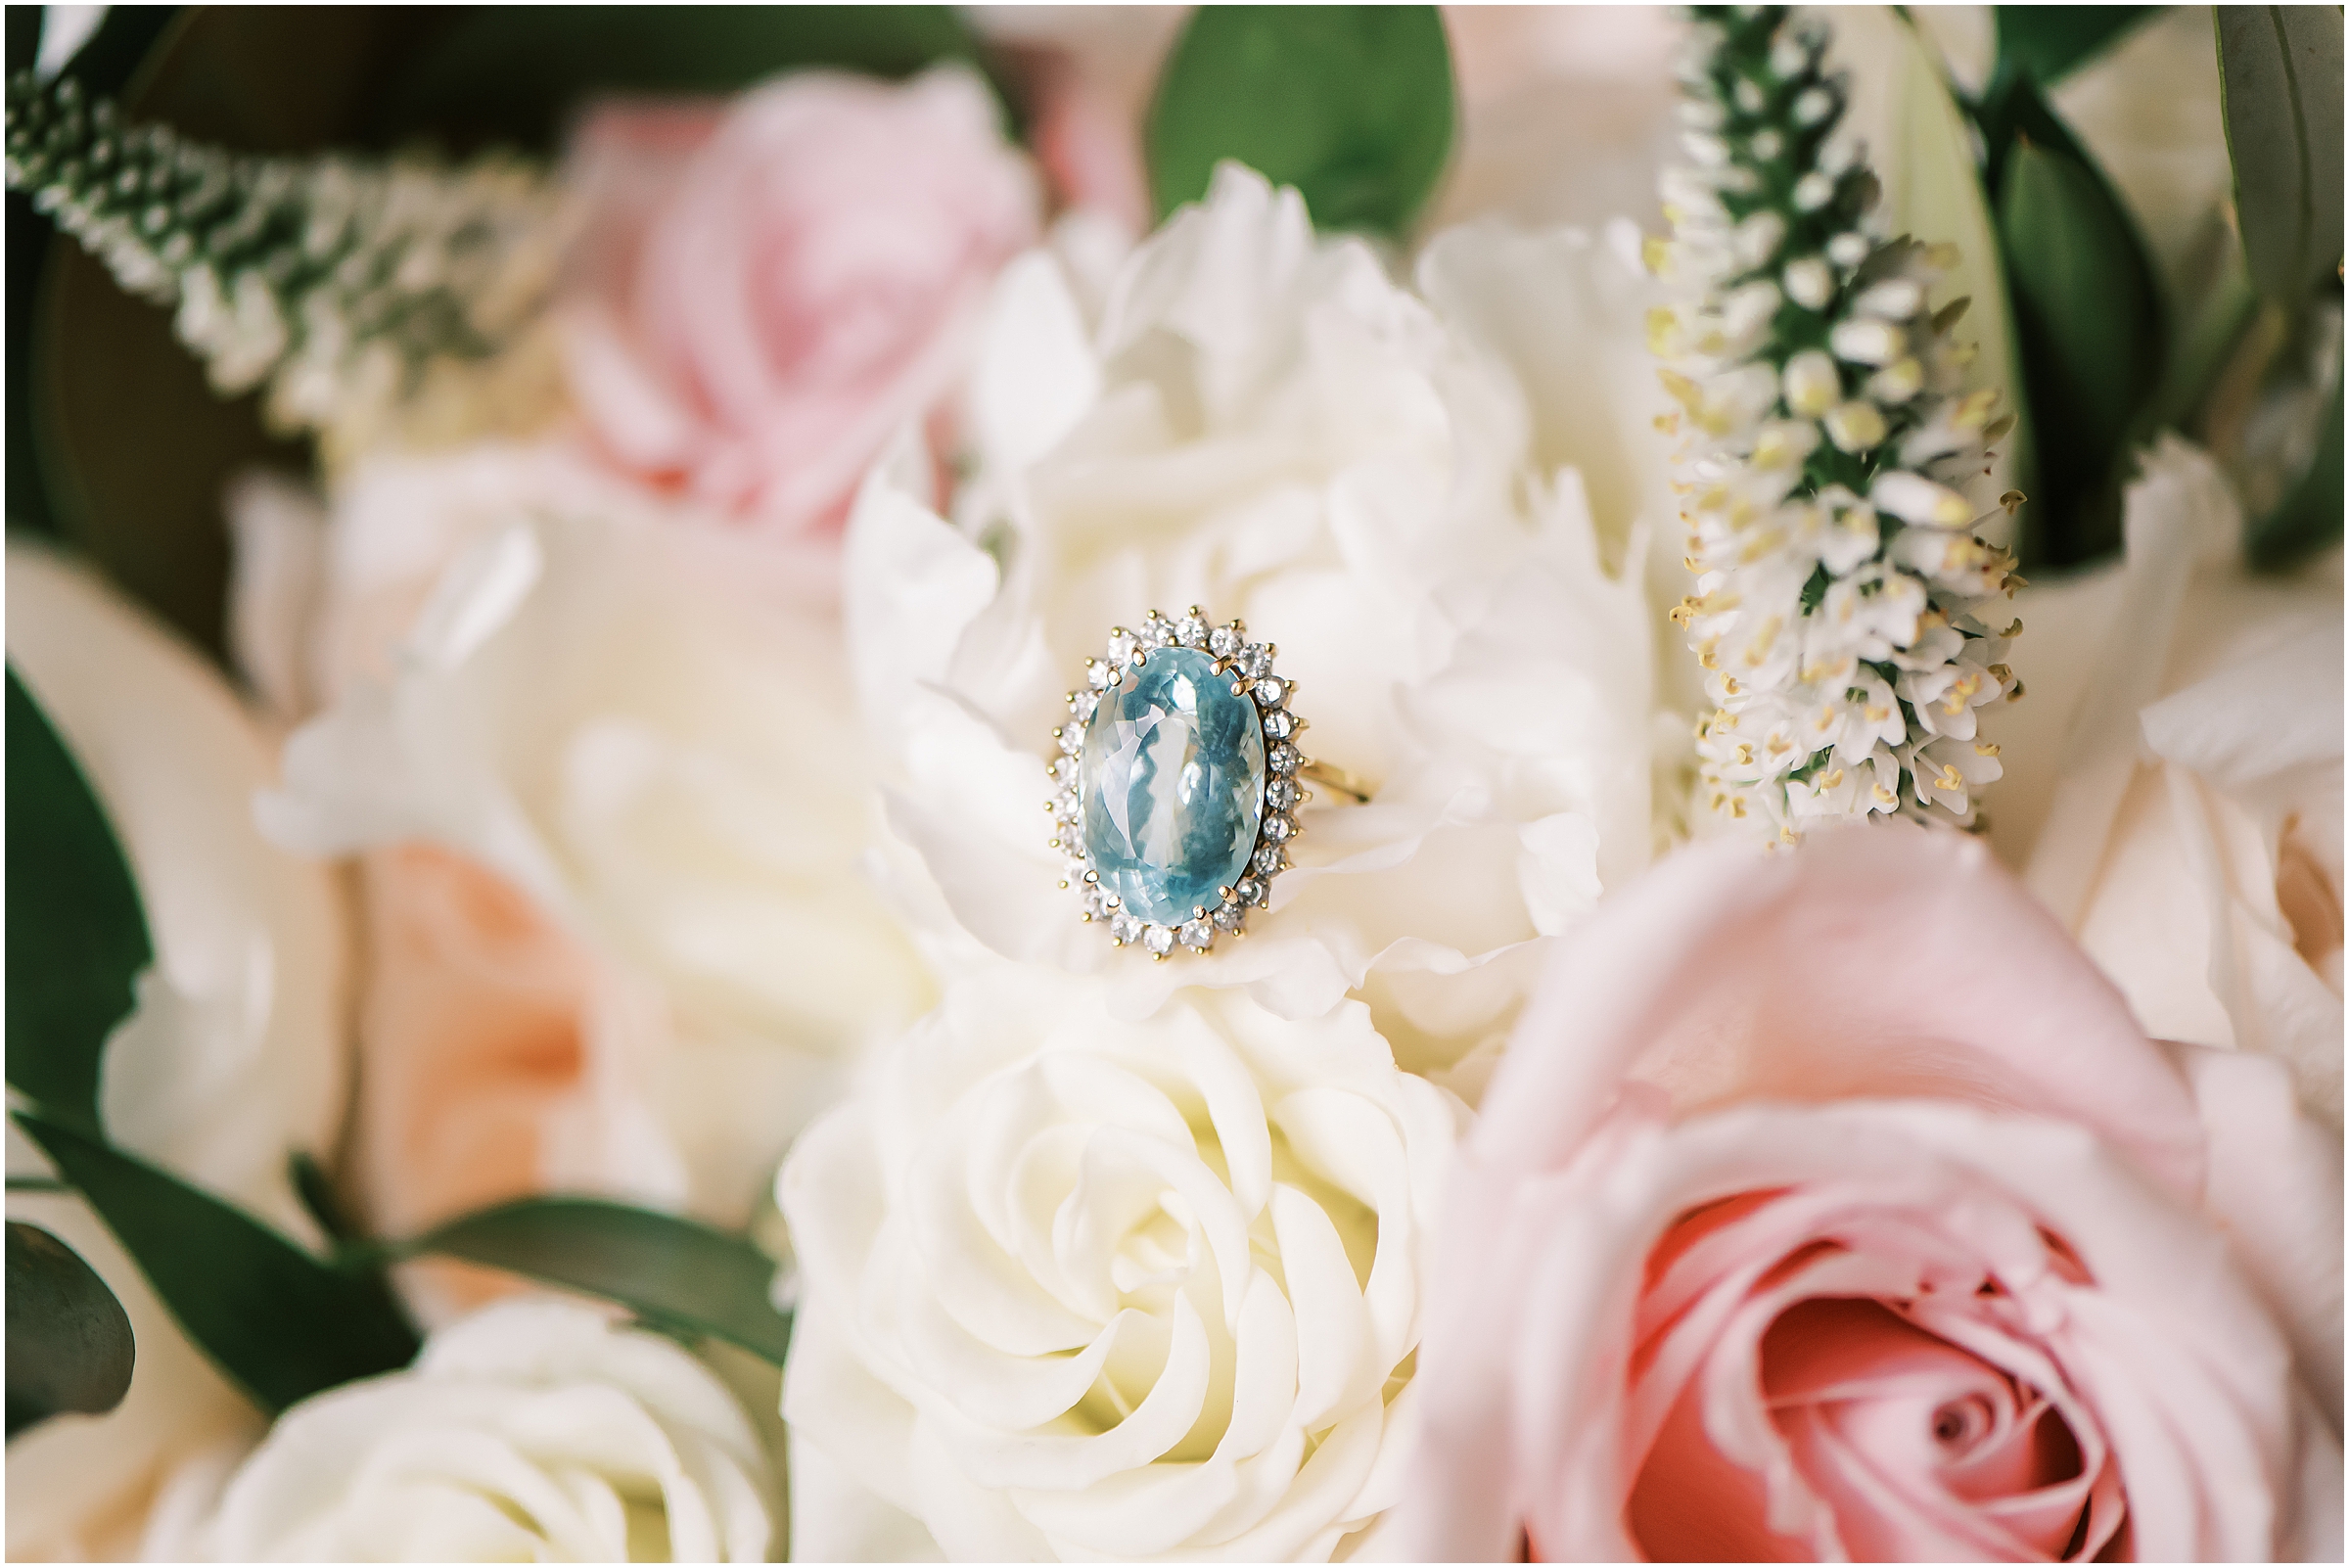 Unique halo diamond wedding ring